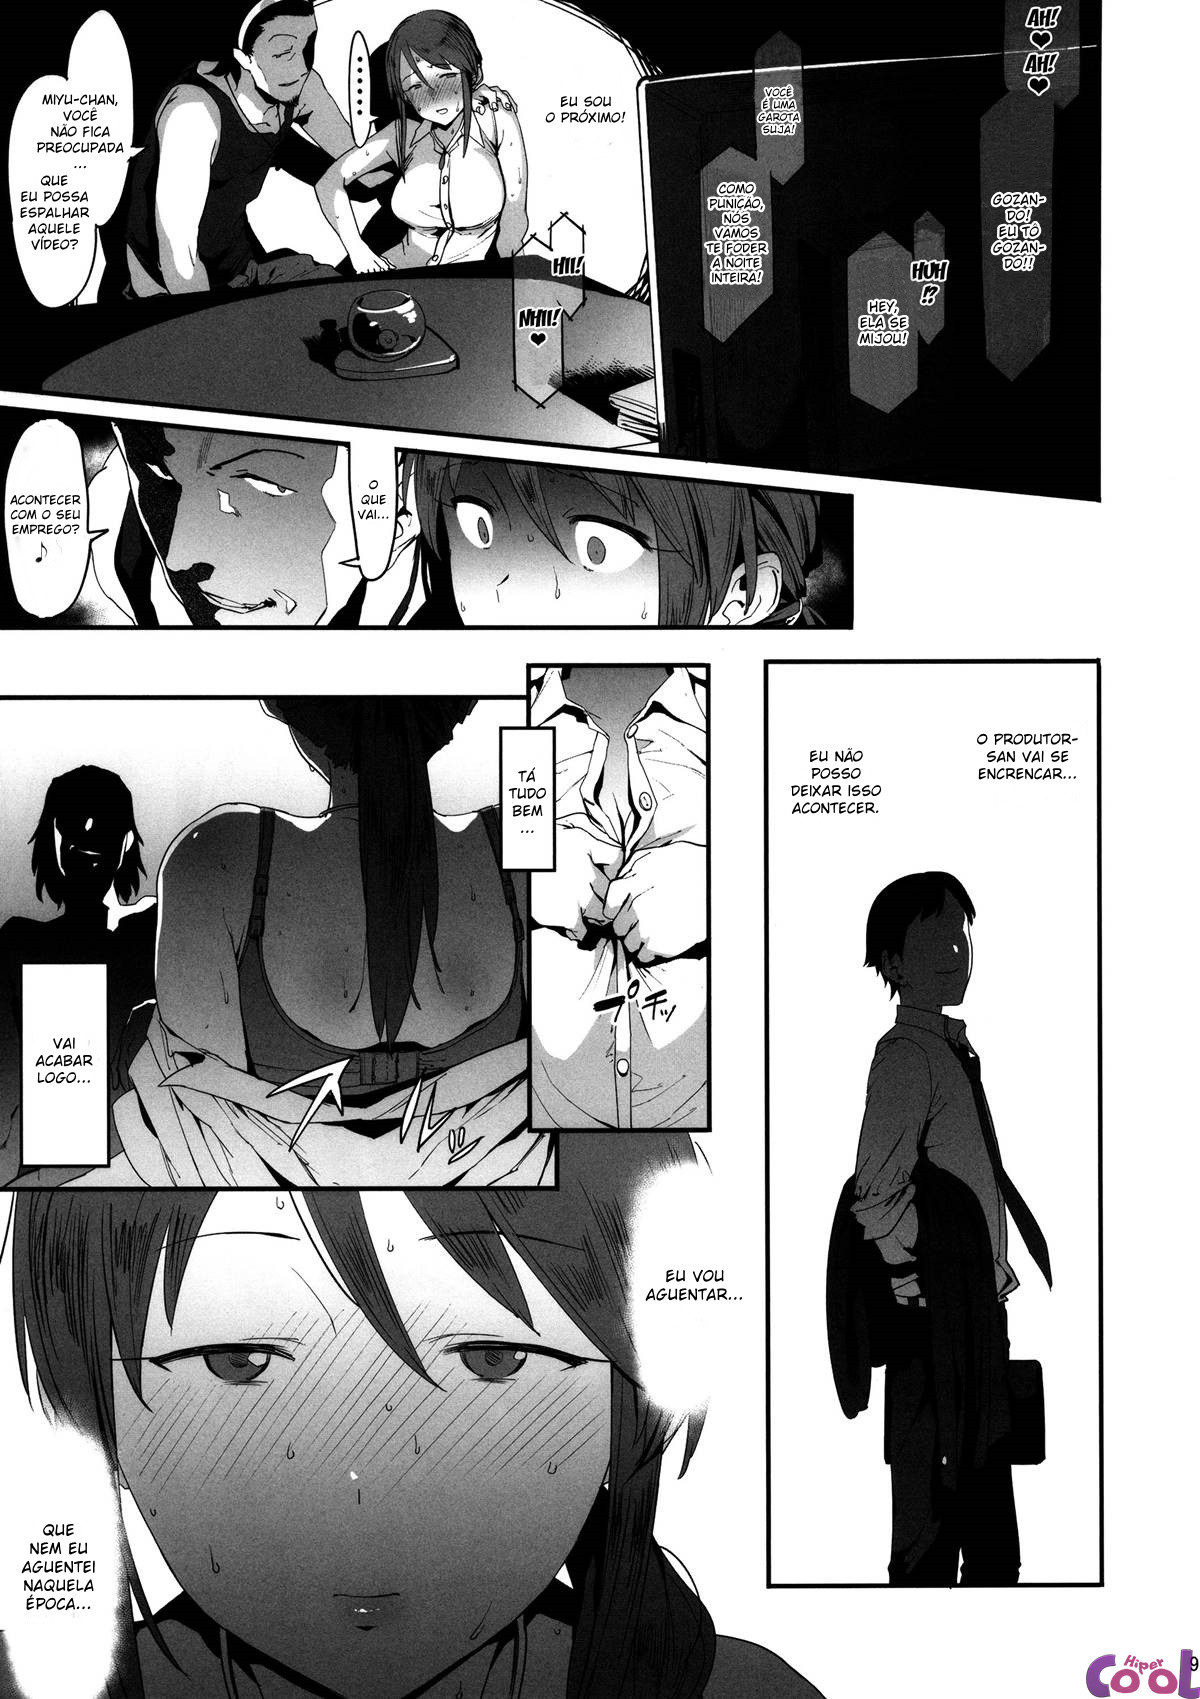 mifune-miyu-no-koukai-chapter-01-page-08.jpg